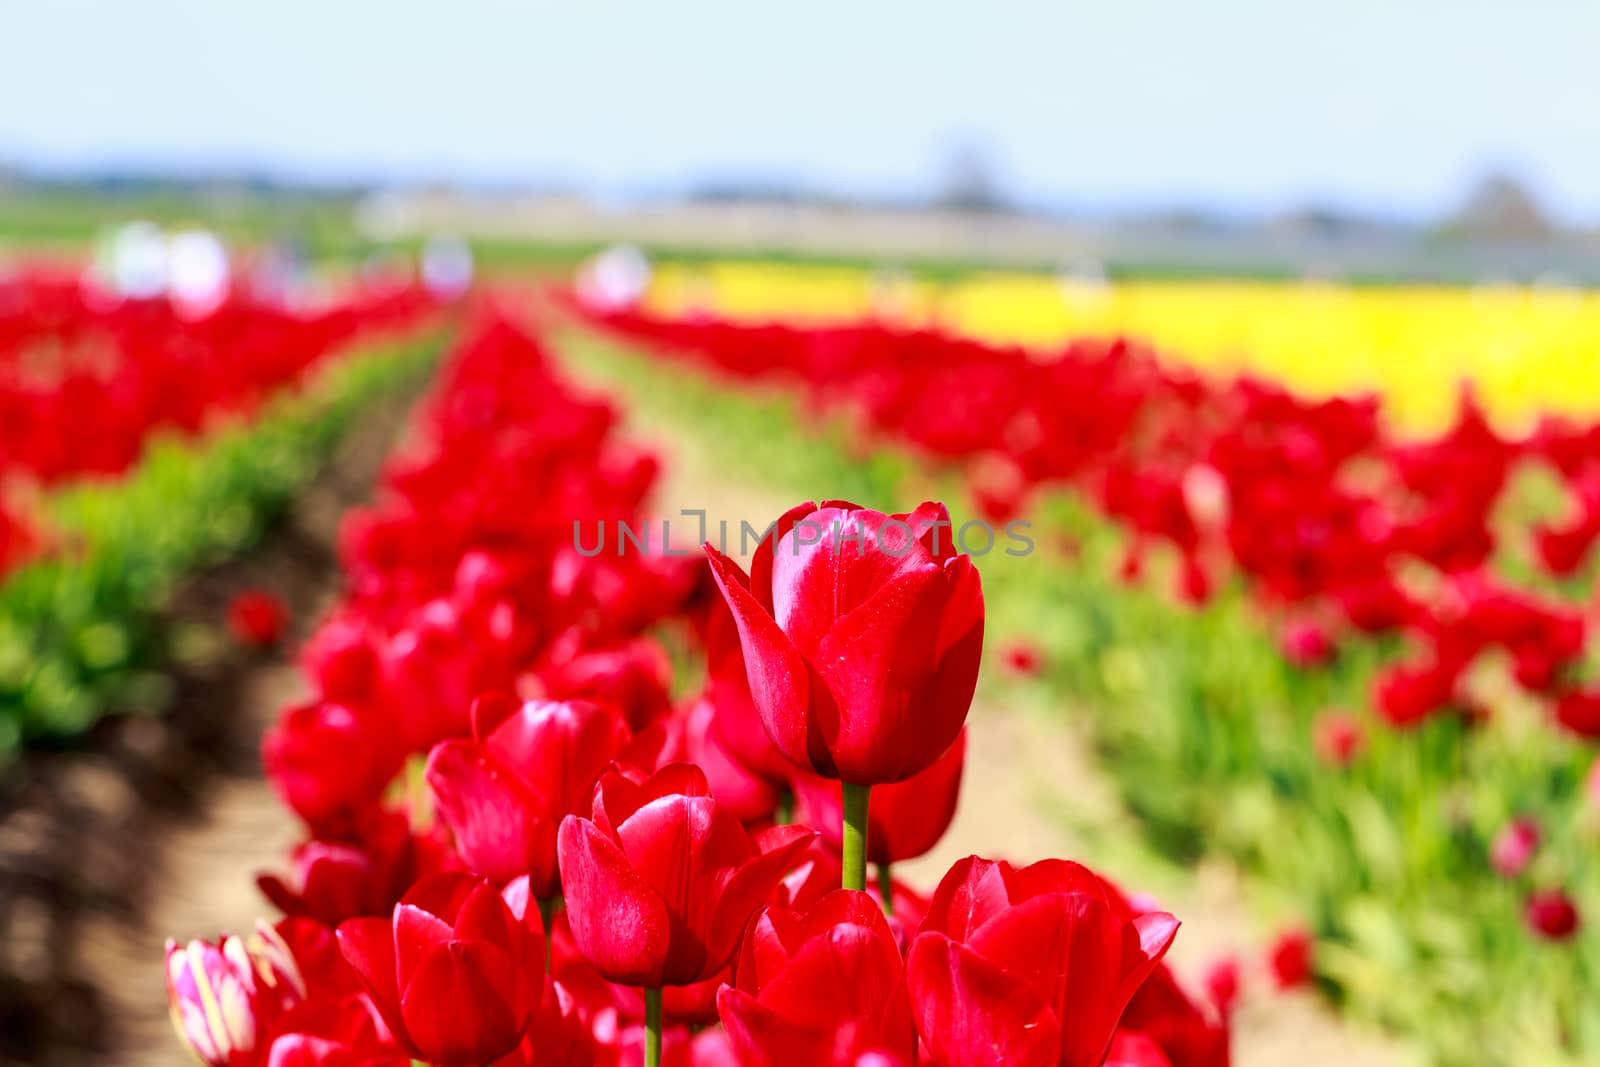 Beautiful tulips by pngstudio